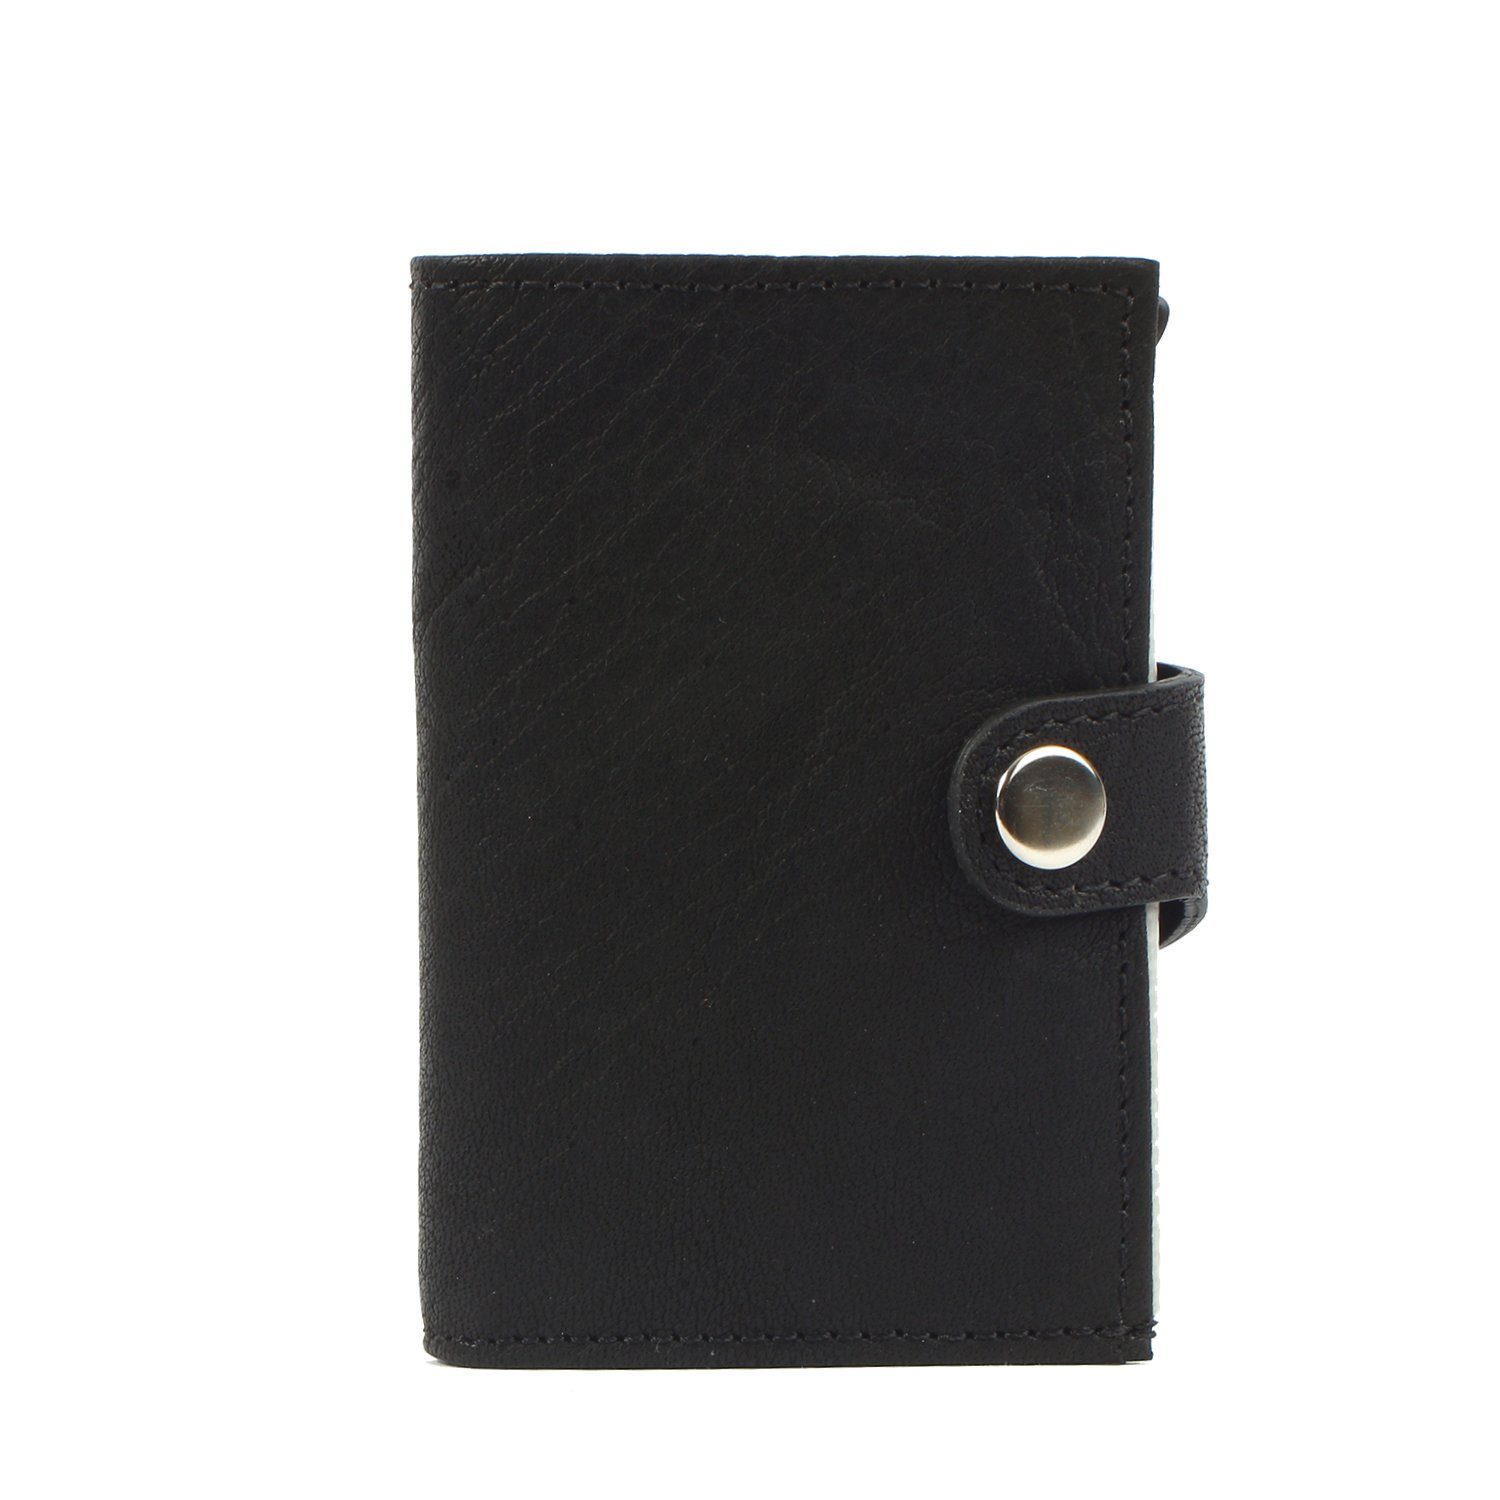 Margelisch Mini Geldbörse noonyu Kreditkartenbörse Leder single deepblack leather, Upcycling aus